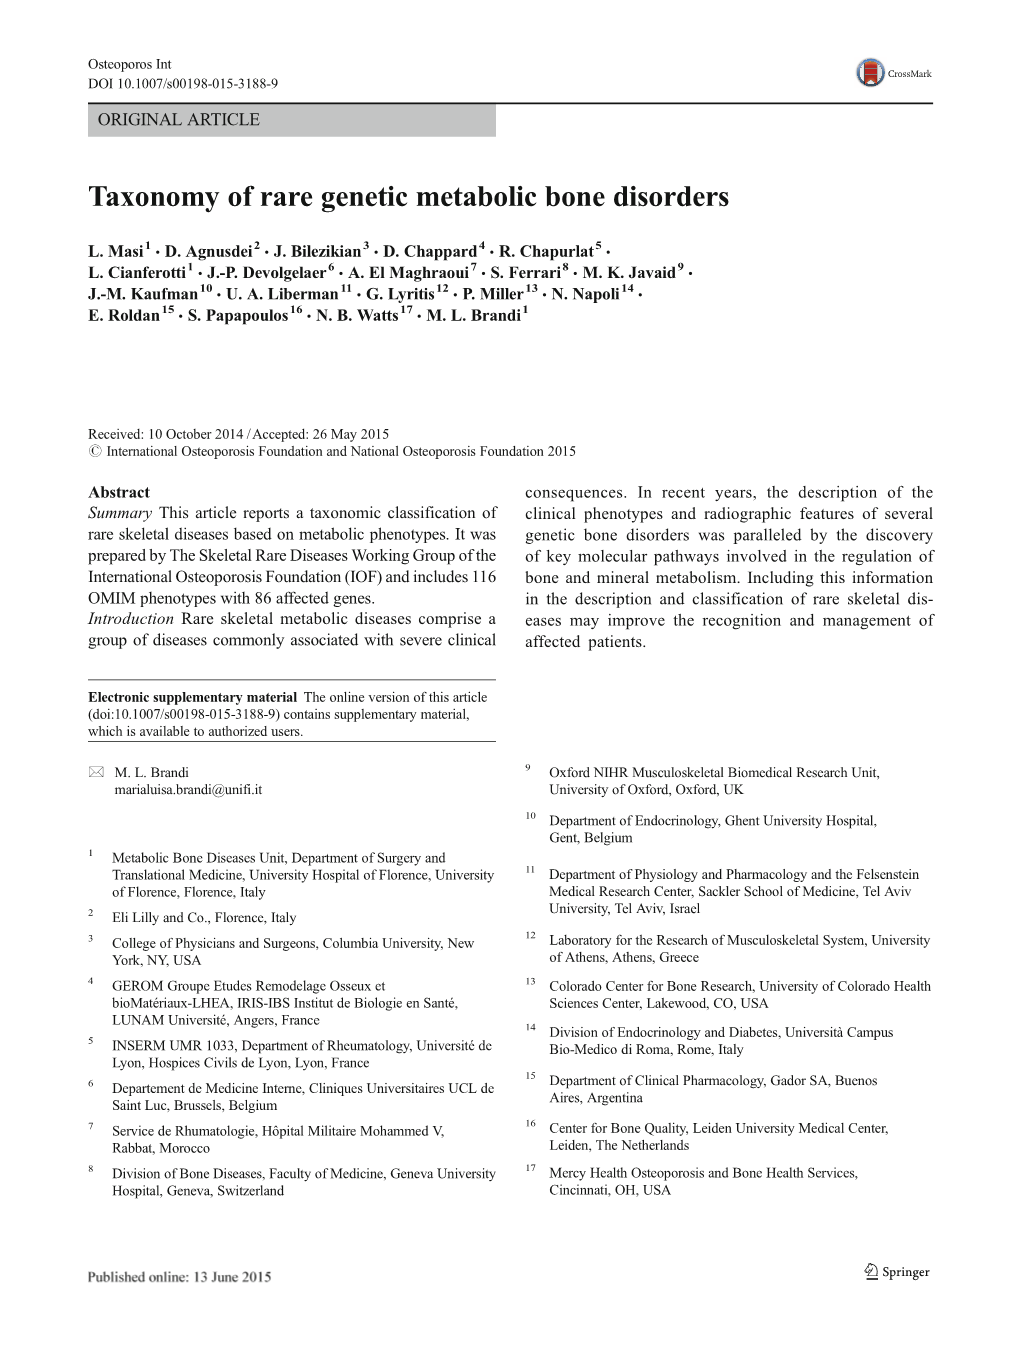 Taxonomy of Rare Genetic Metabolic Bone Disorders